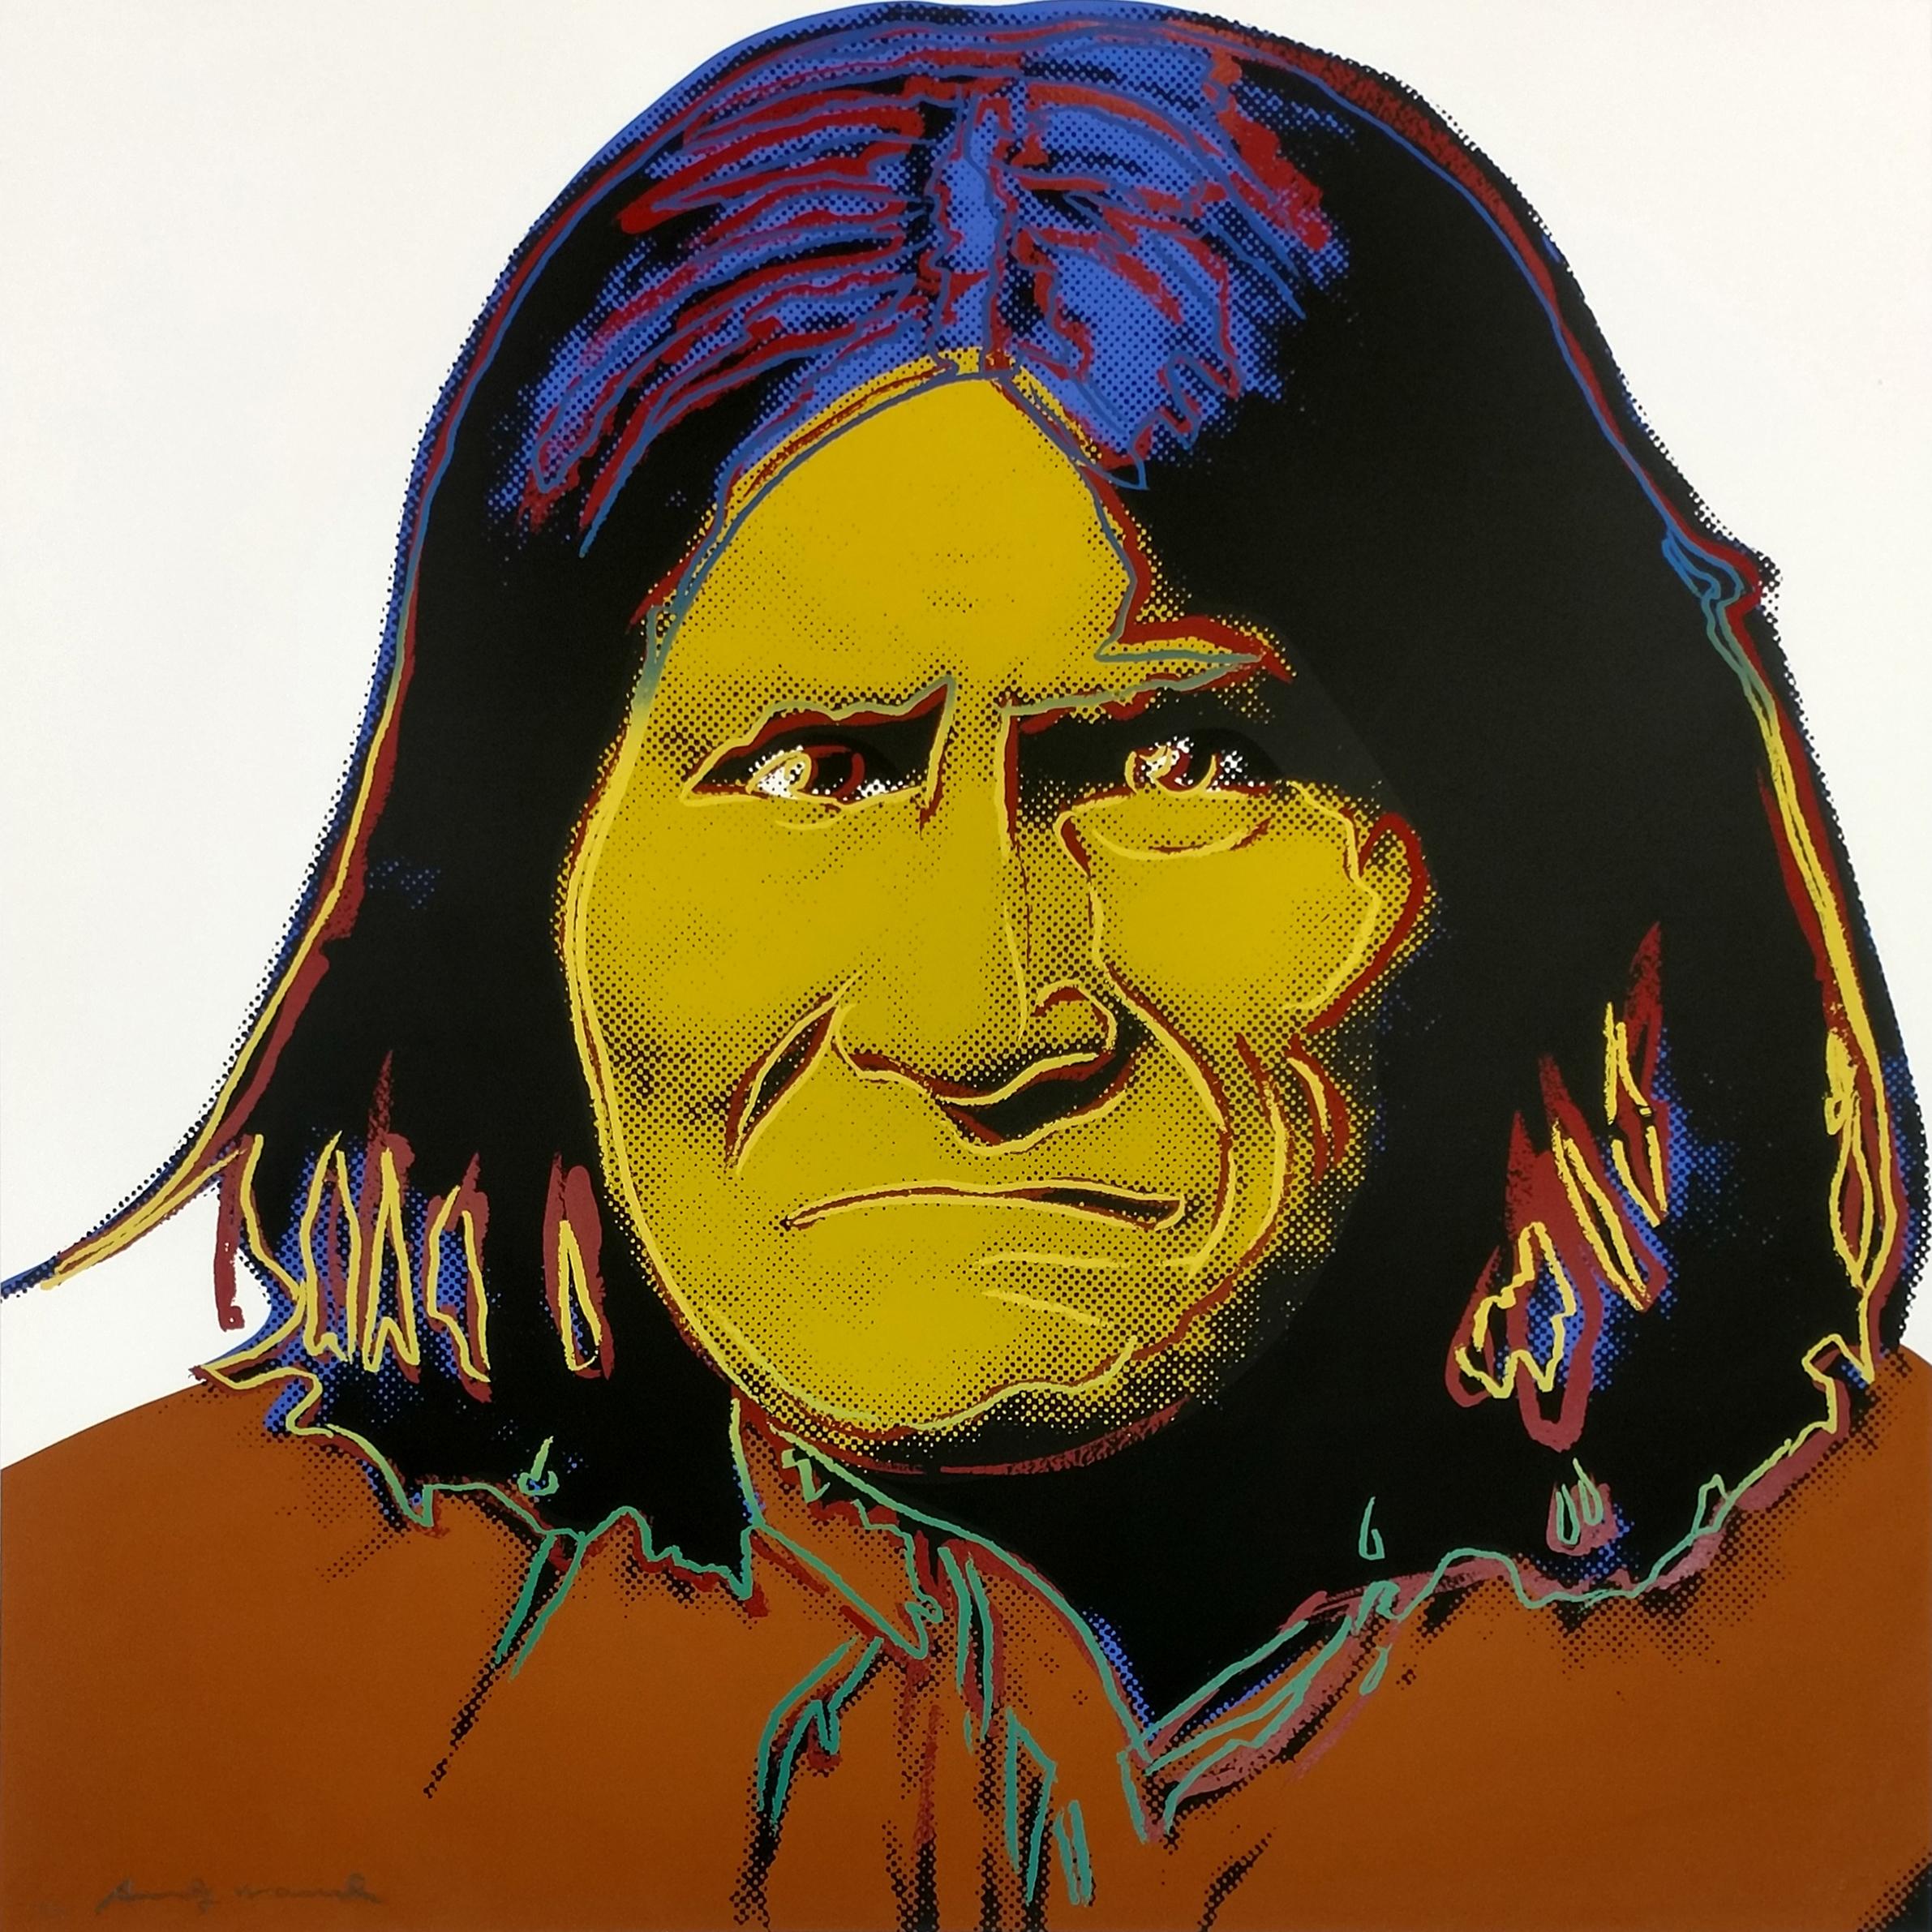 Andy Warhol Portrait Print - GERONIMO FS II.384